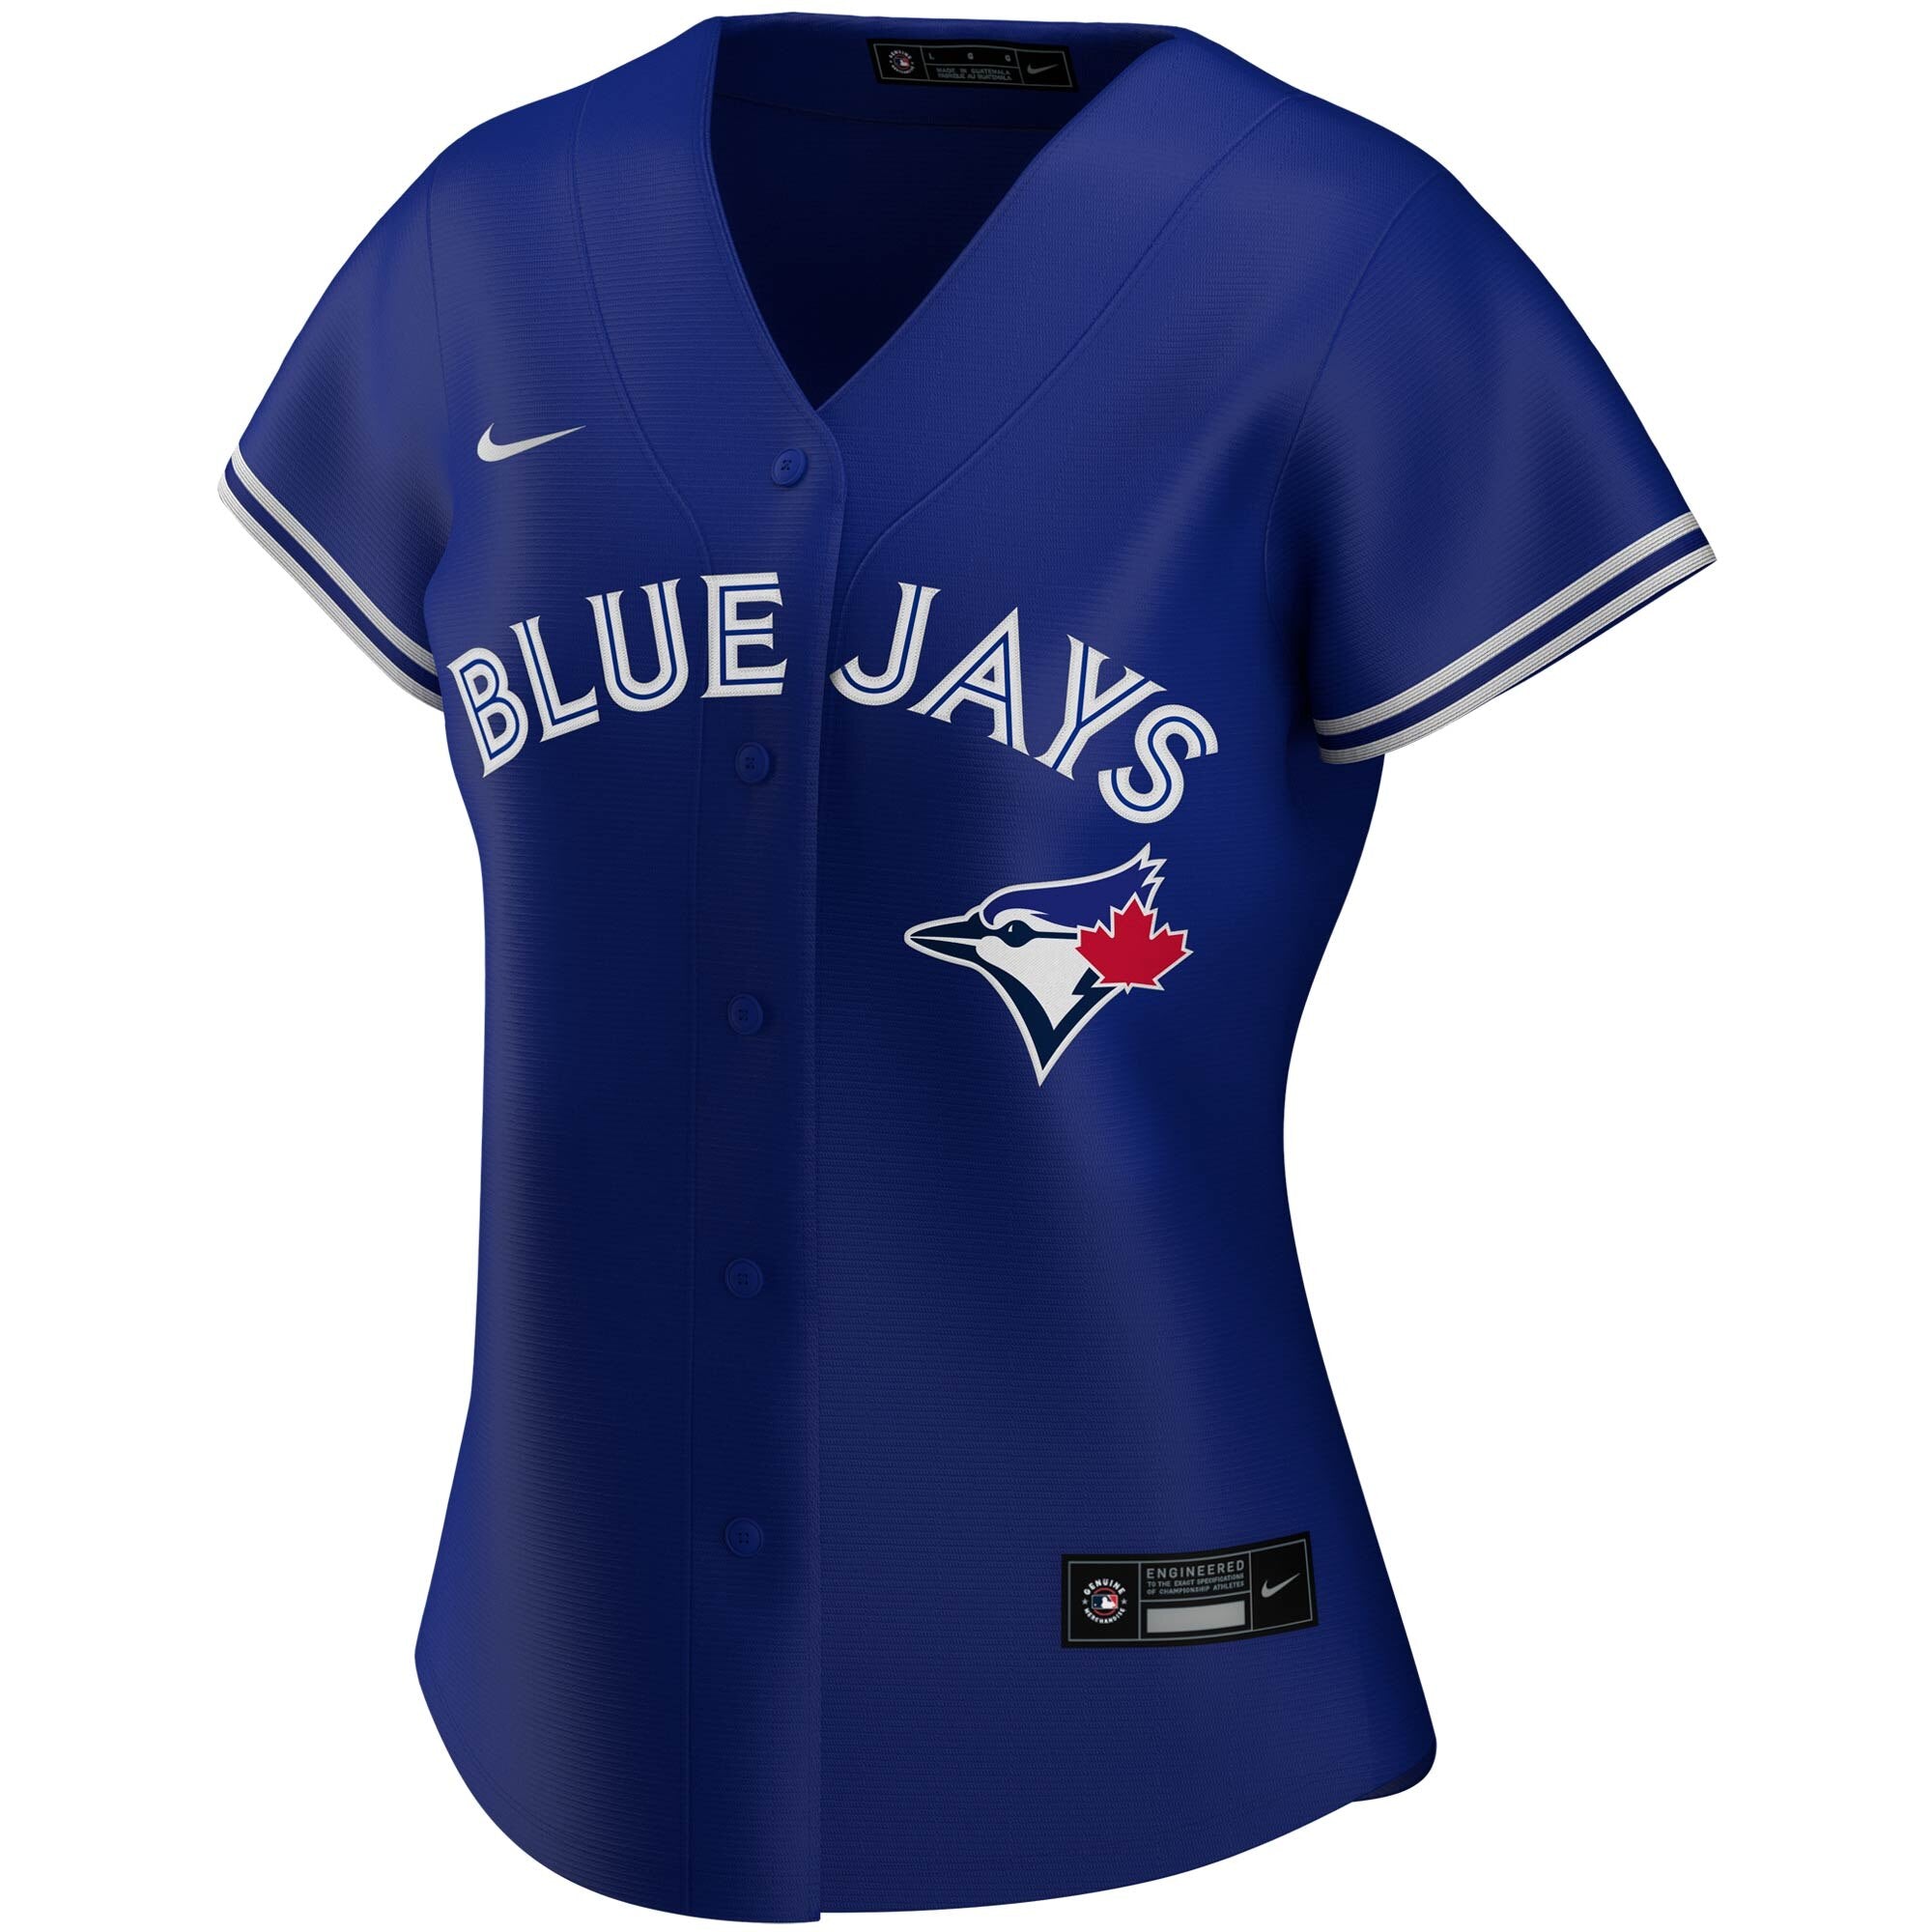 Nike Women's MLB Toronto Blue Jays Alternate Replica Jersey